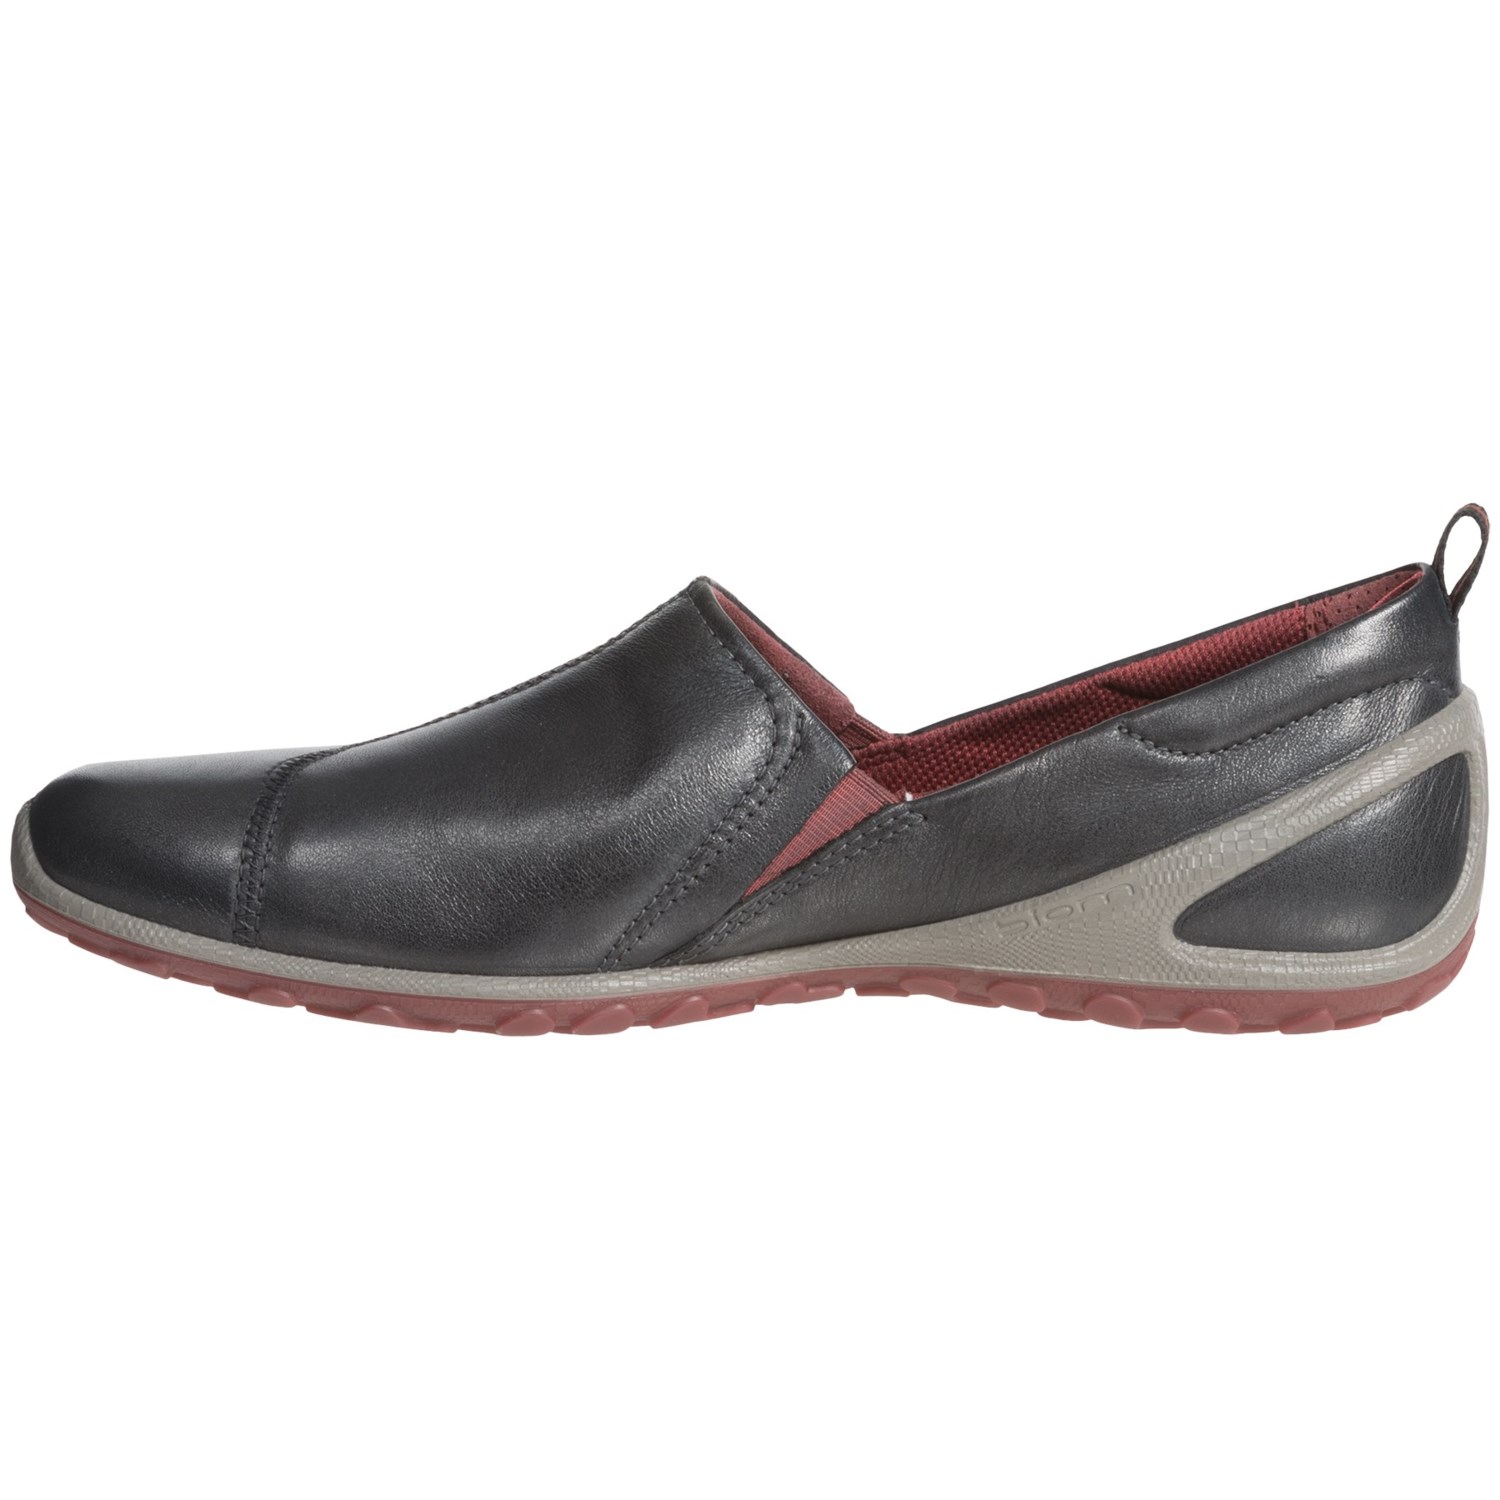 ECCO BIOM Lite Shoes (For Women) - Save 62%